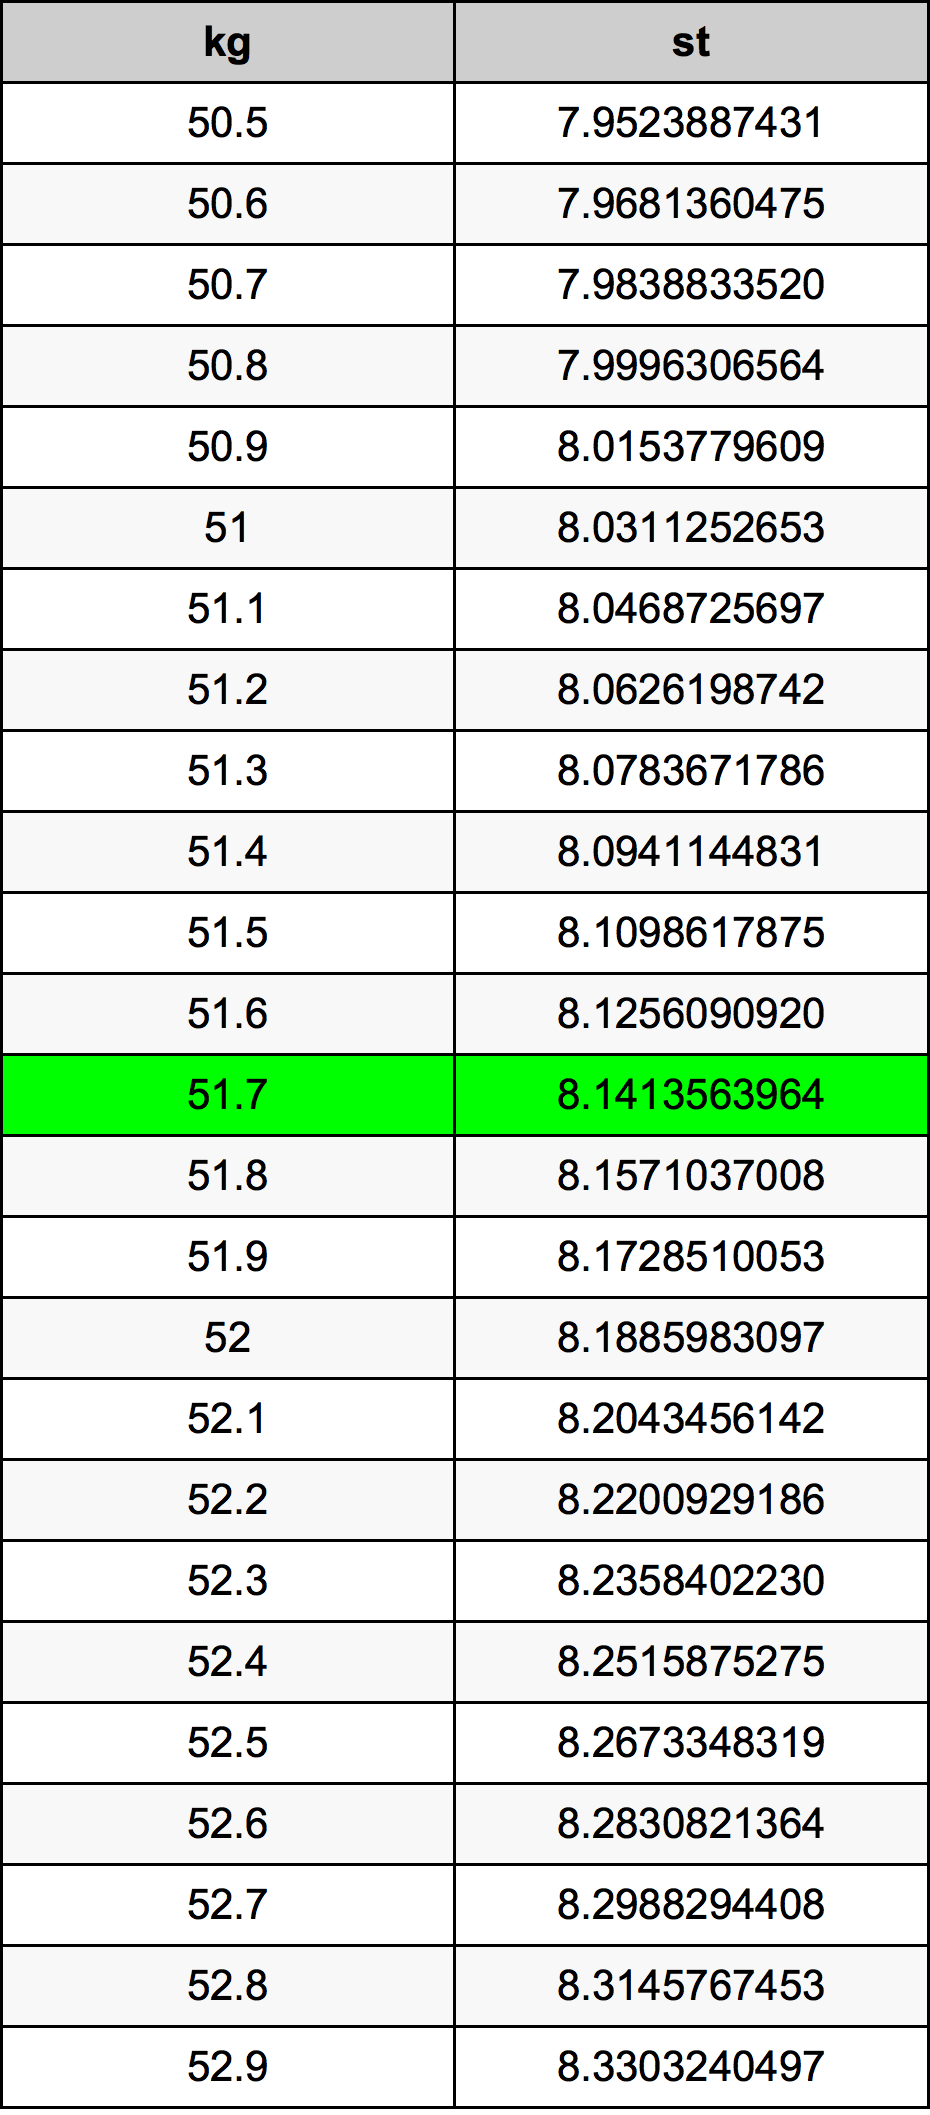 51.7 Kilogramma konverżjoni tabella